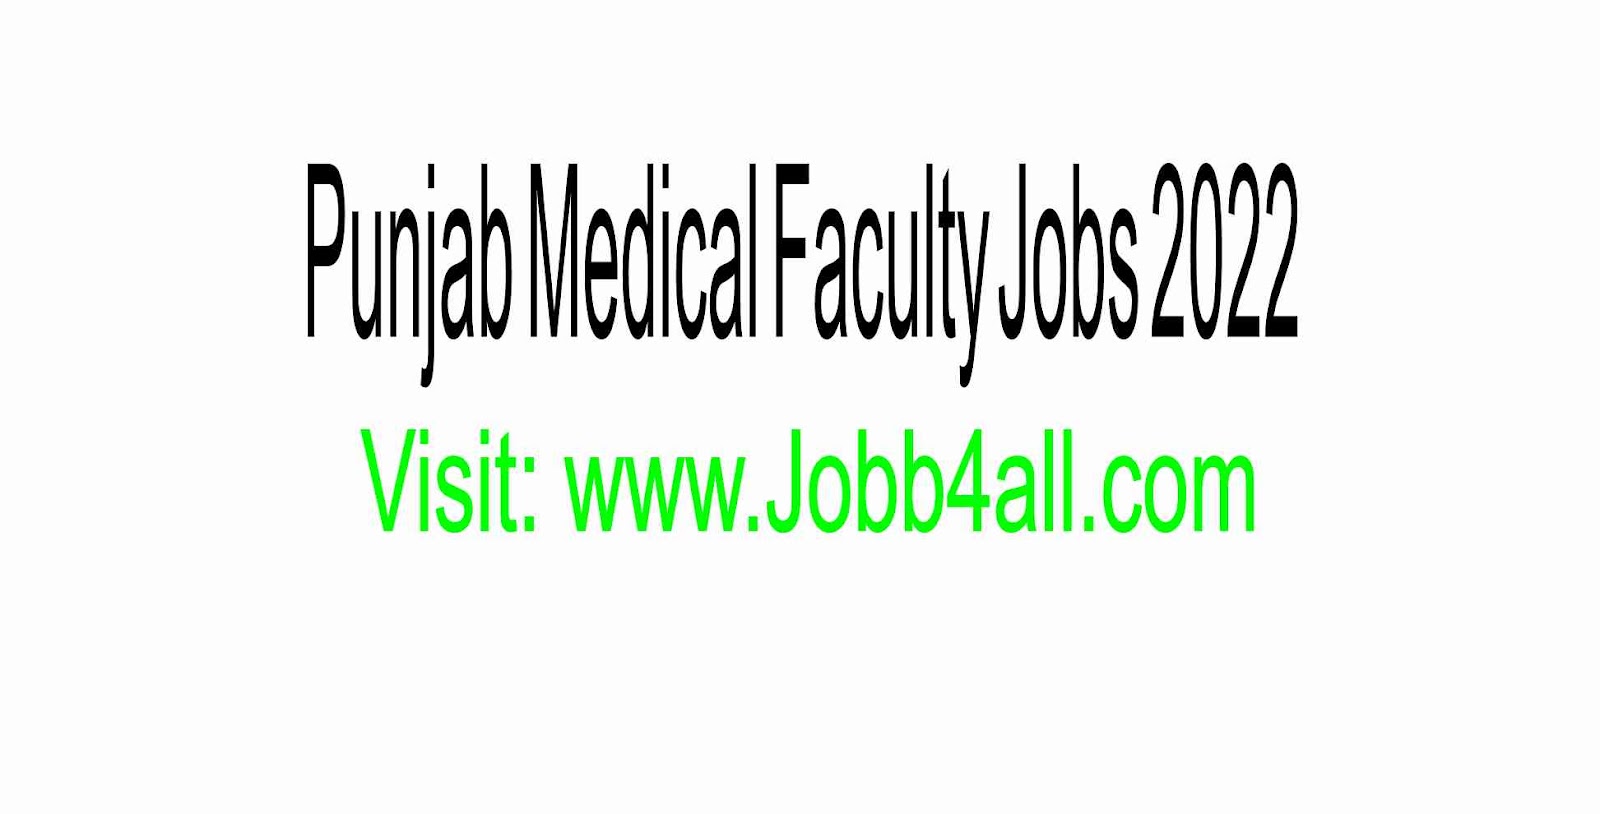 Punjab Medical Faculty Jobs in Pakistan